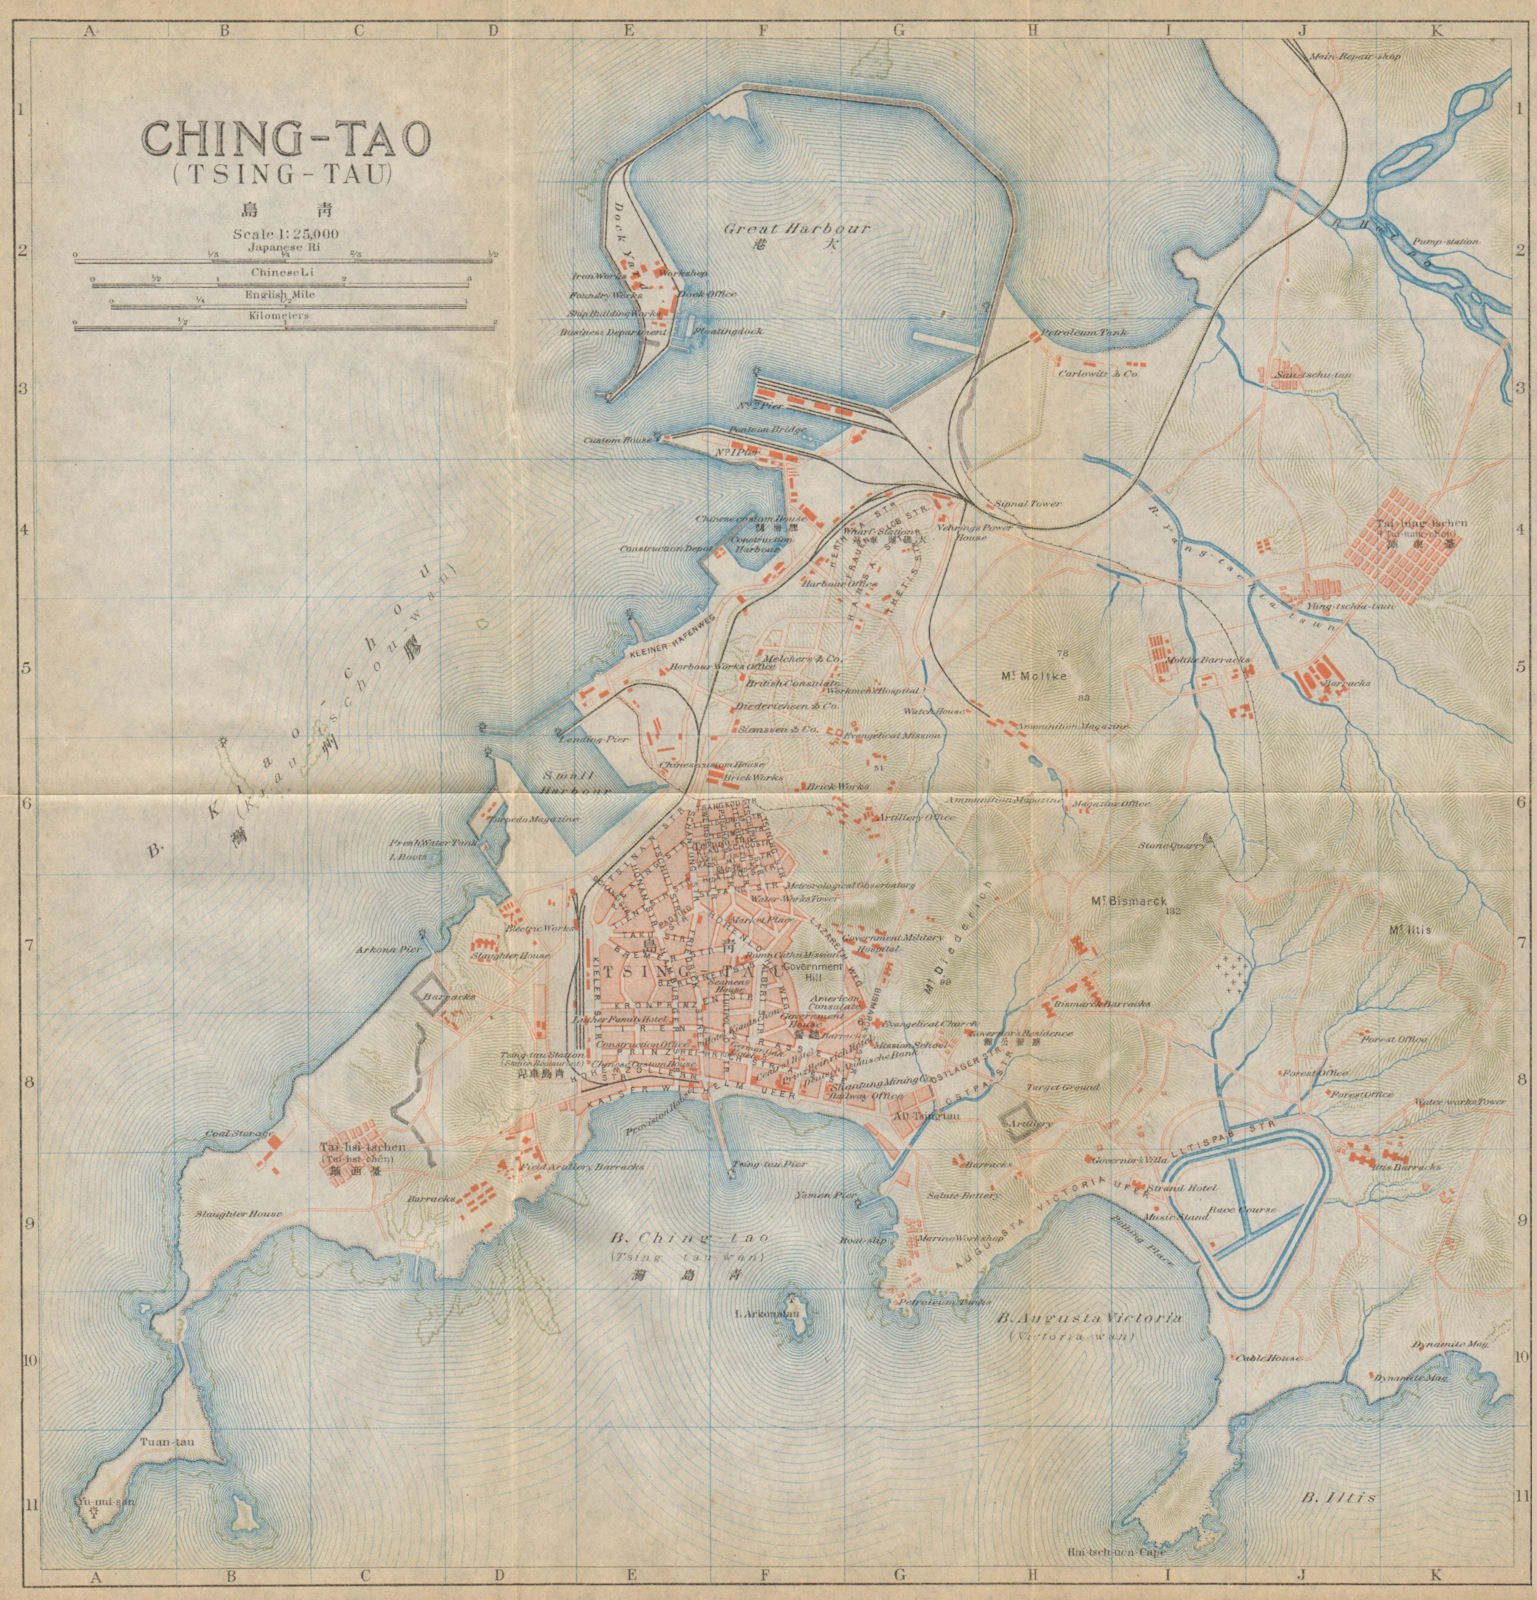 Associate Product 'Ching-tao (Tsing-tau)'. Qingdao antique town city plan. China 1915 old map